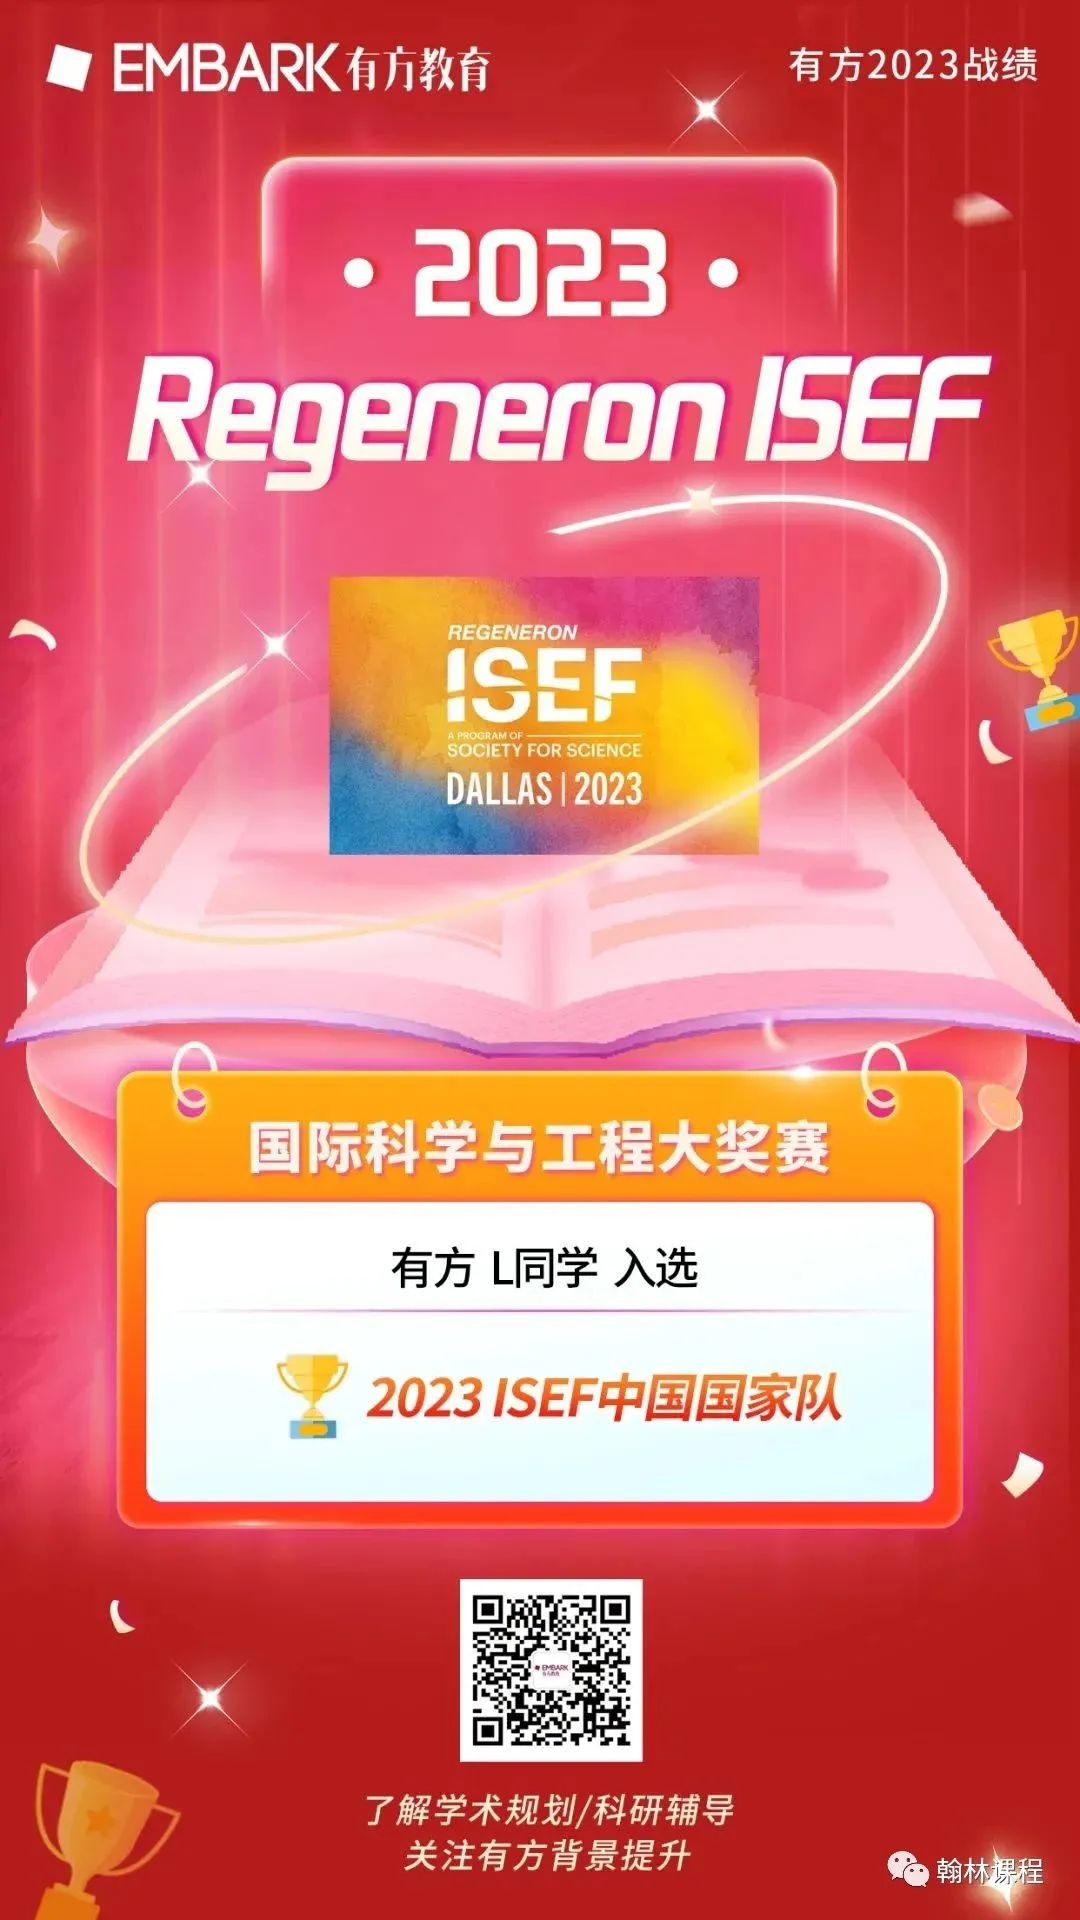 2023 ISEF总决赛将至！国内学生该如何参赛？这两条赛道记好了！丨推广